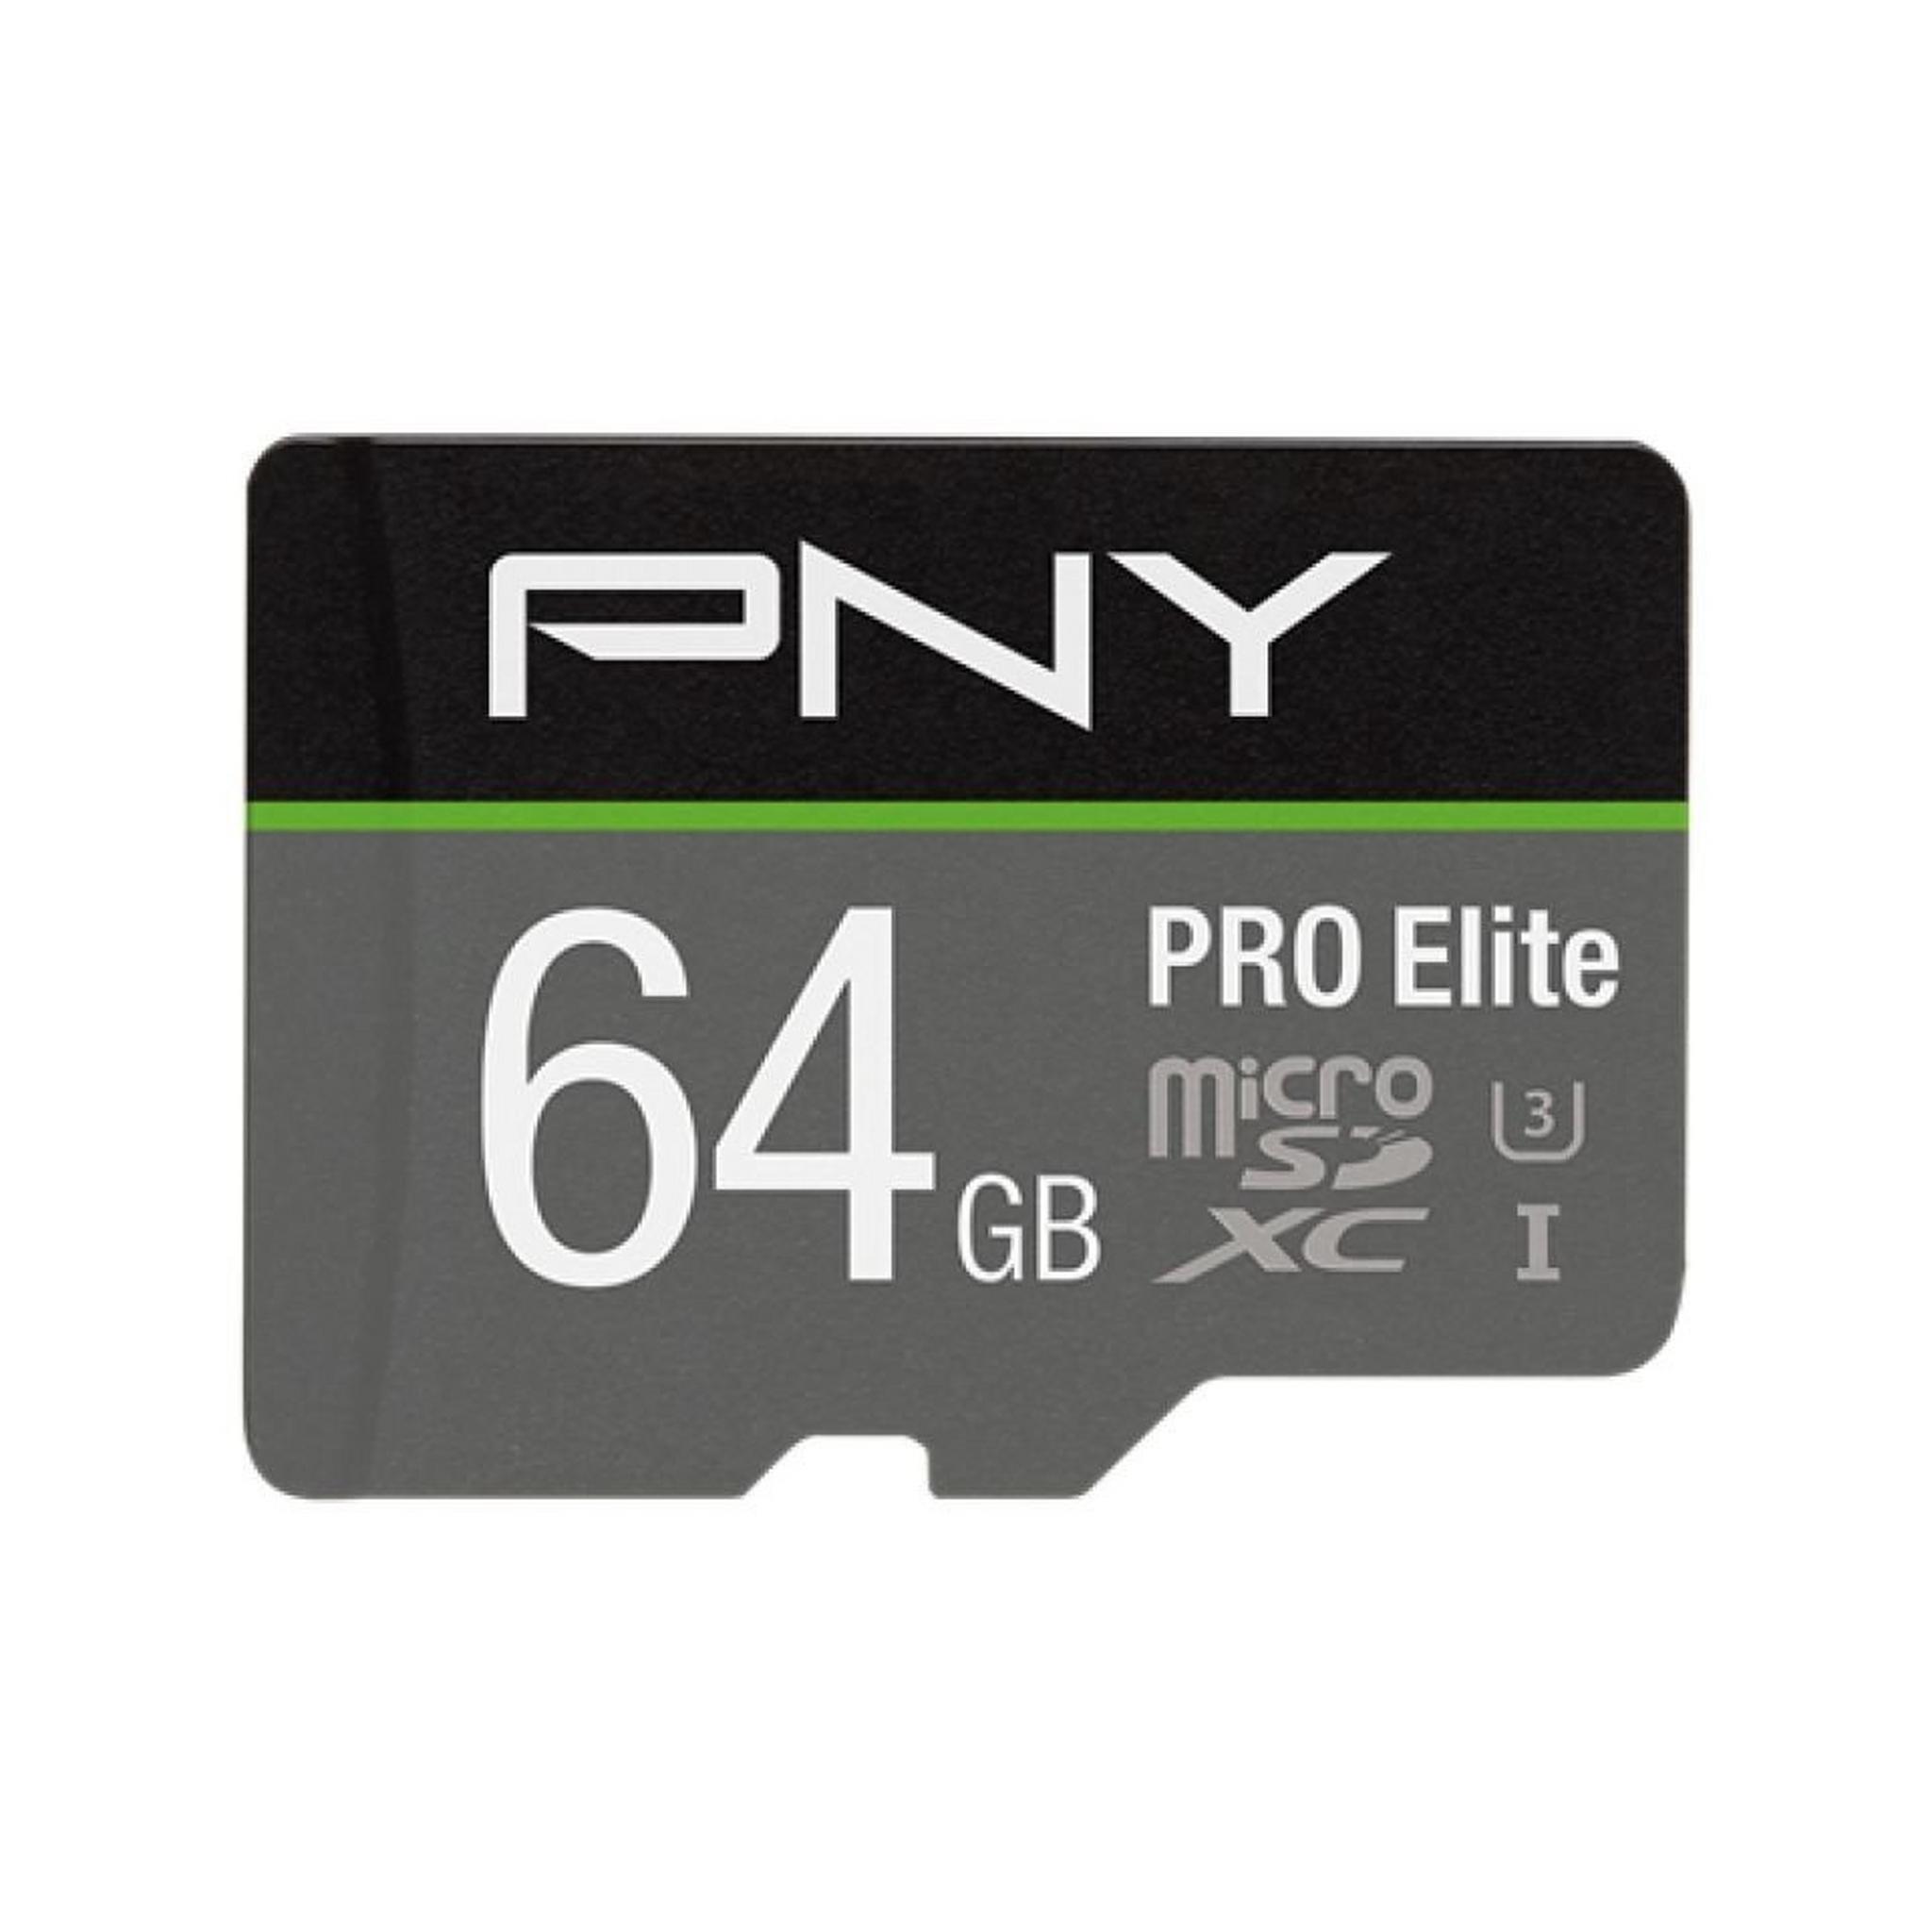 PNY PRO Elite MicroSD Card 64GB